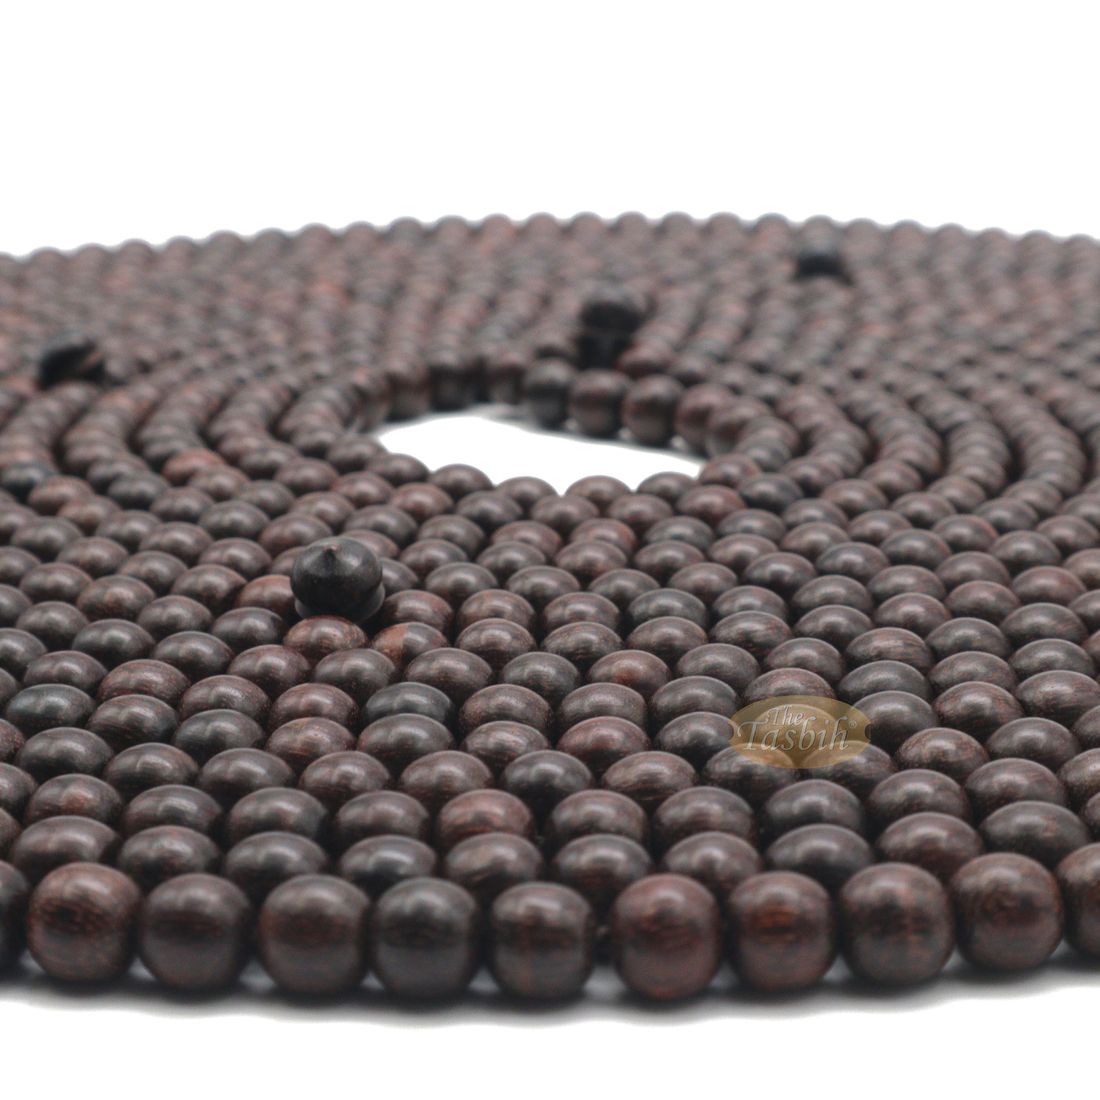 1000-bead Tamarind Tree Tasbih 8mm Sufi Prayer Beads with Tassels